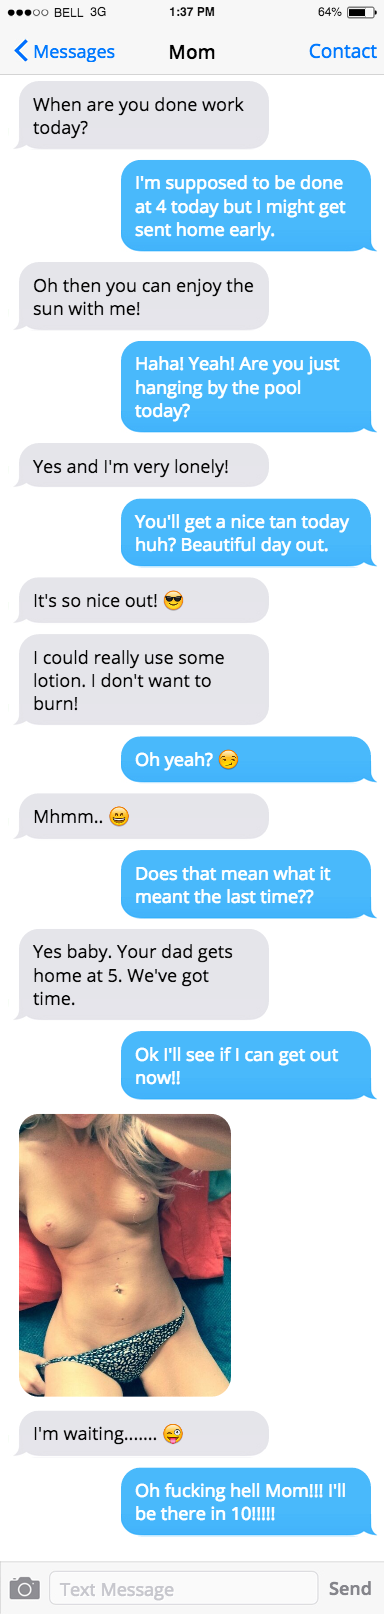 Mom sexting porn Ebony anal movies